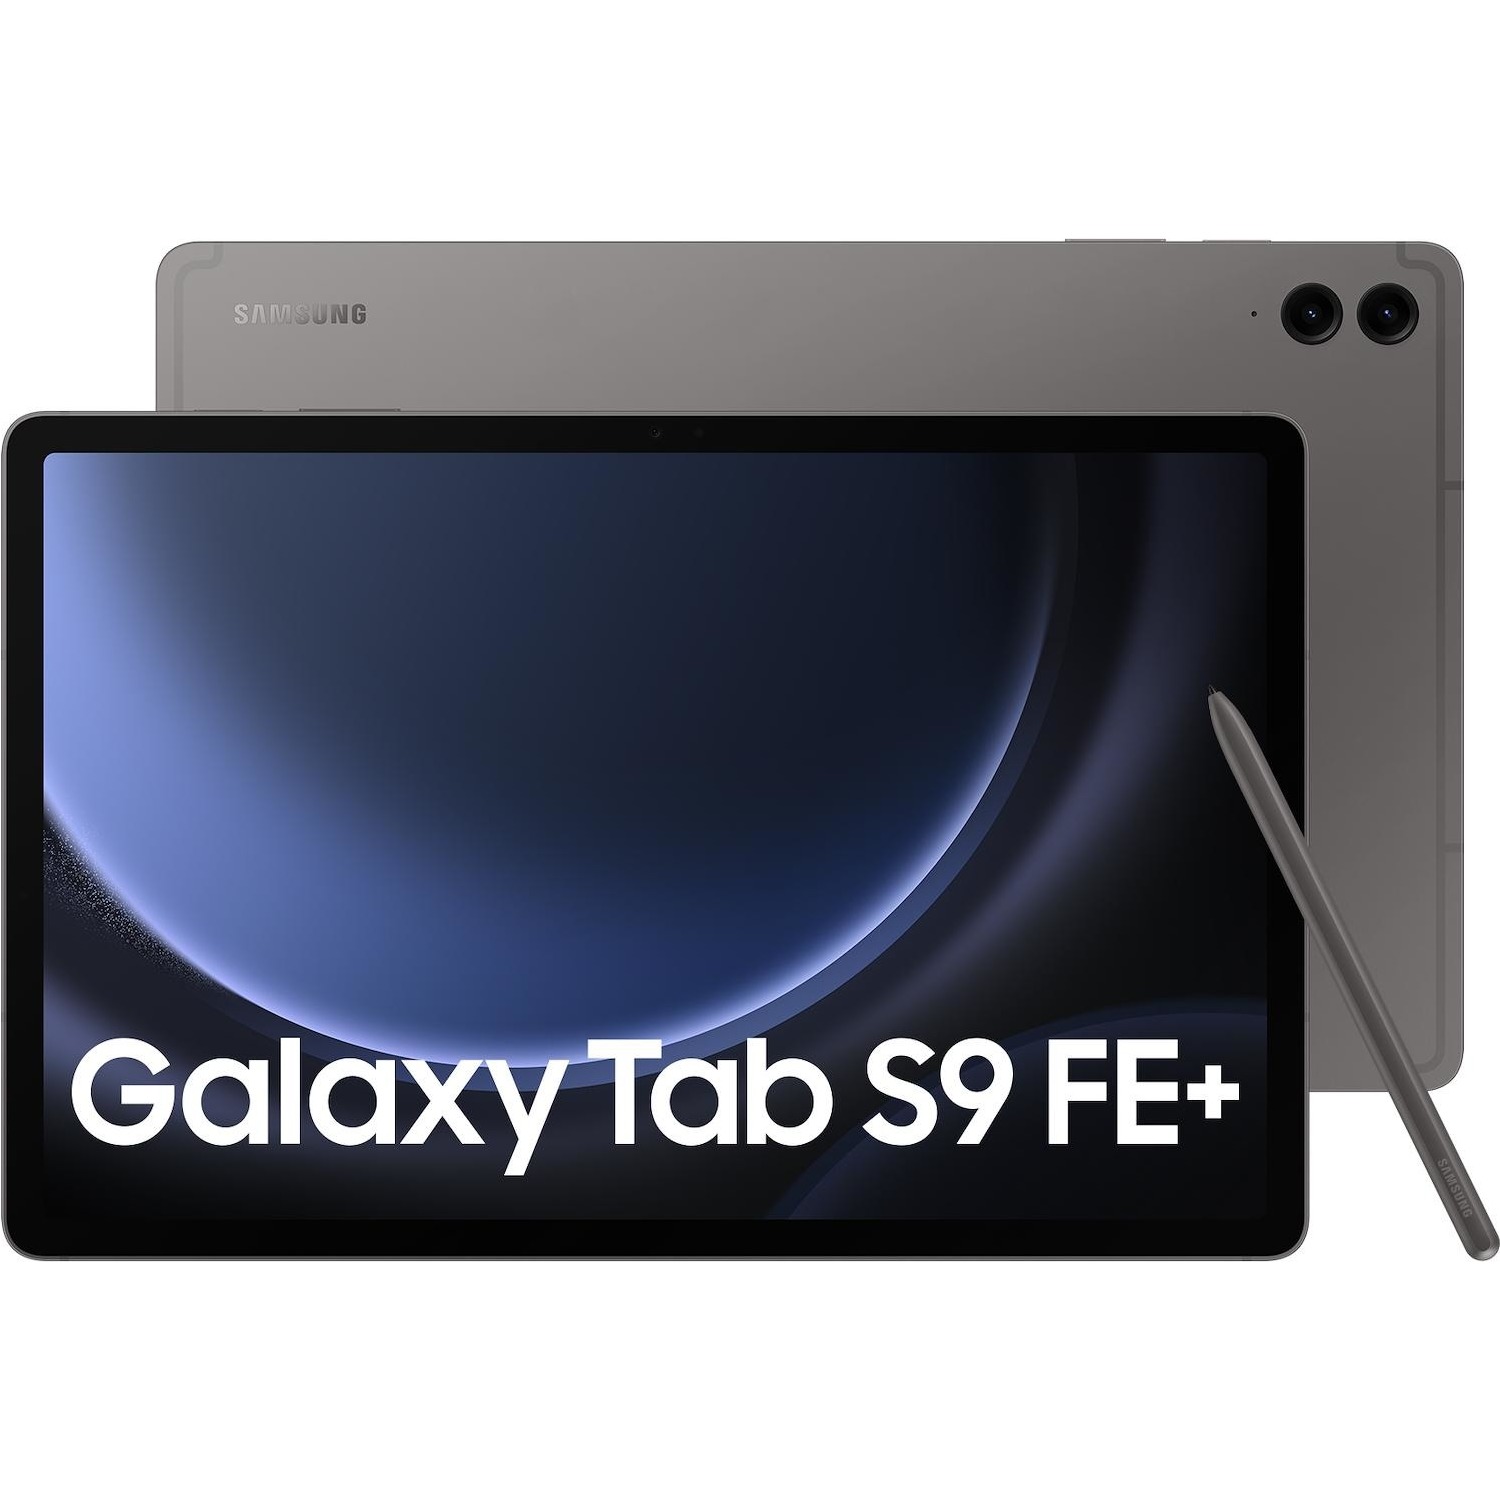 Immagine per Tablet Samsung Galaxy Tab S9 FE+ 8/128GB Wi-Fi grigio da DIMOStore